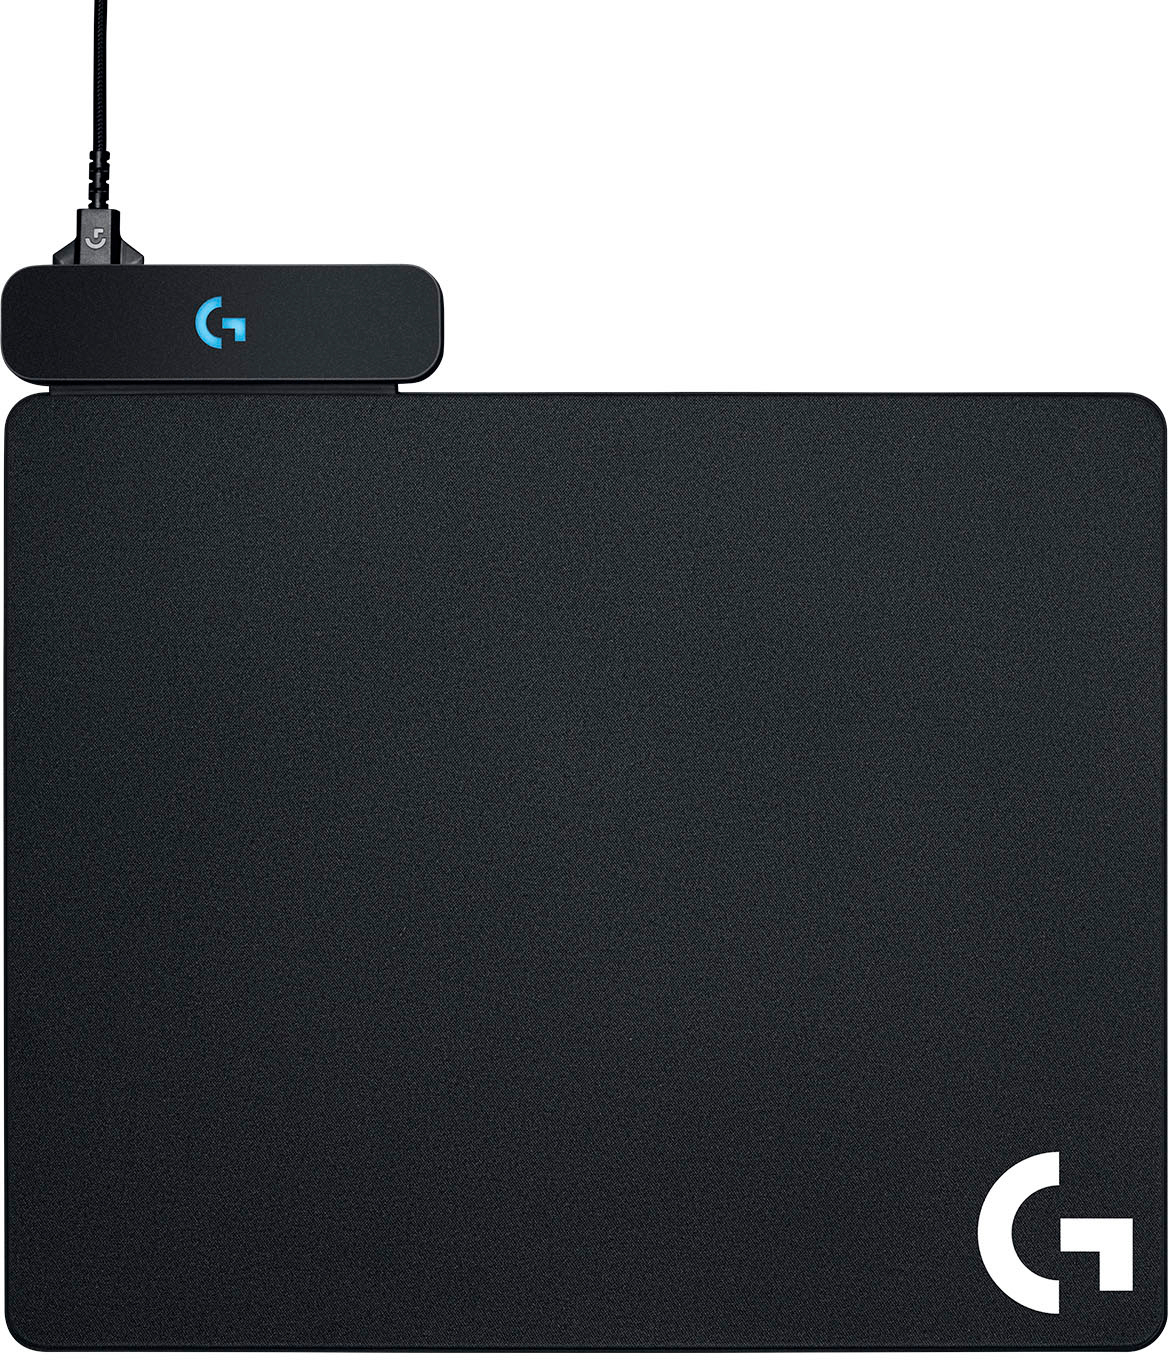 POWERPLAY Wireless System for Select Logitech Black 943-000109 - Best Buy